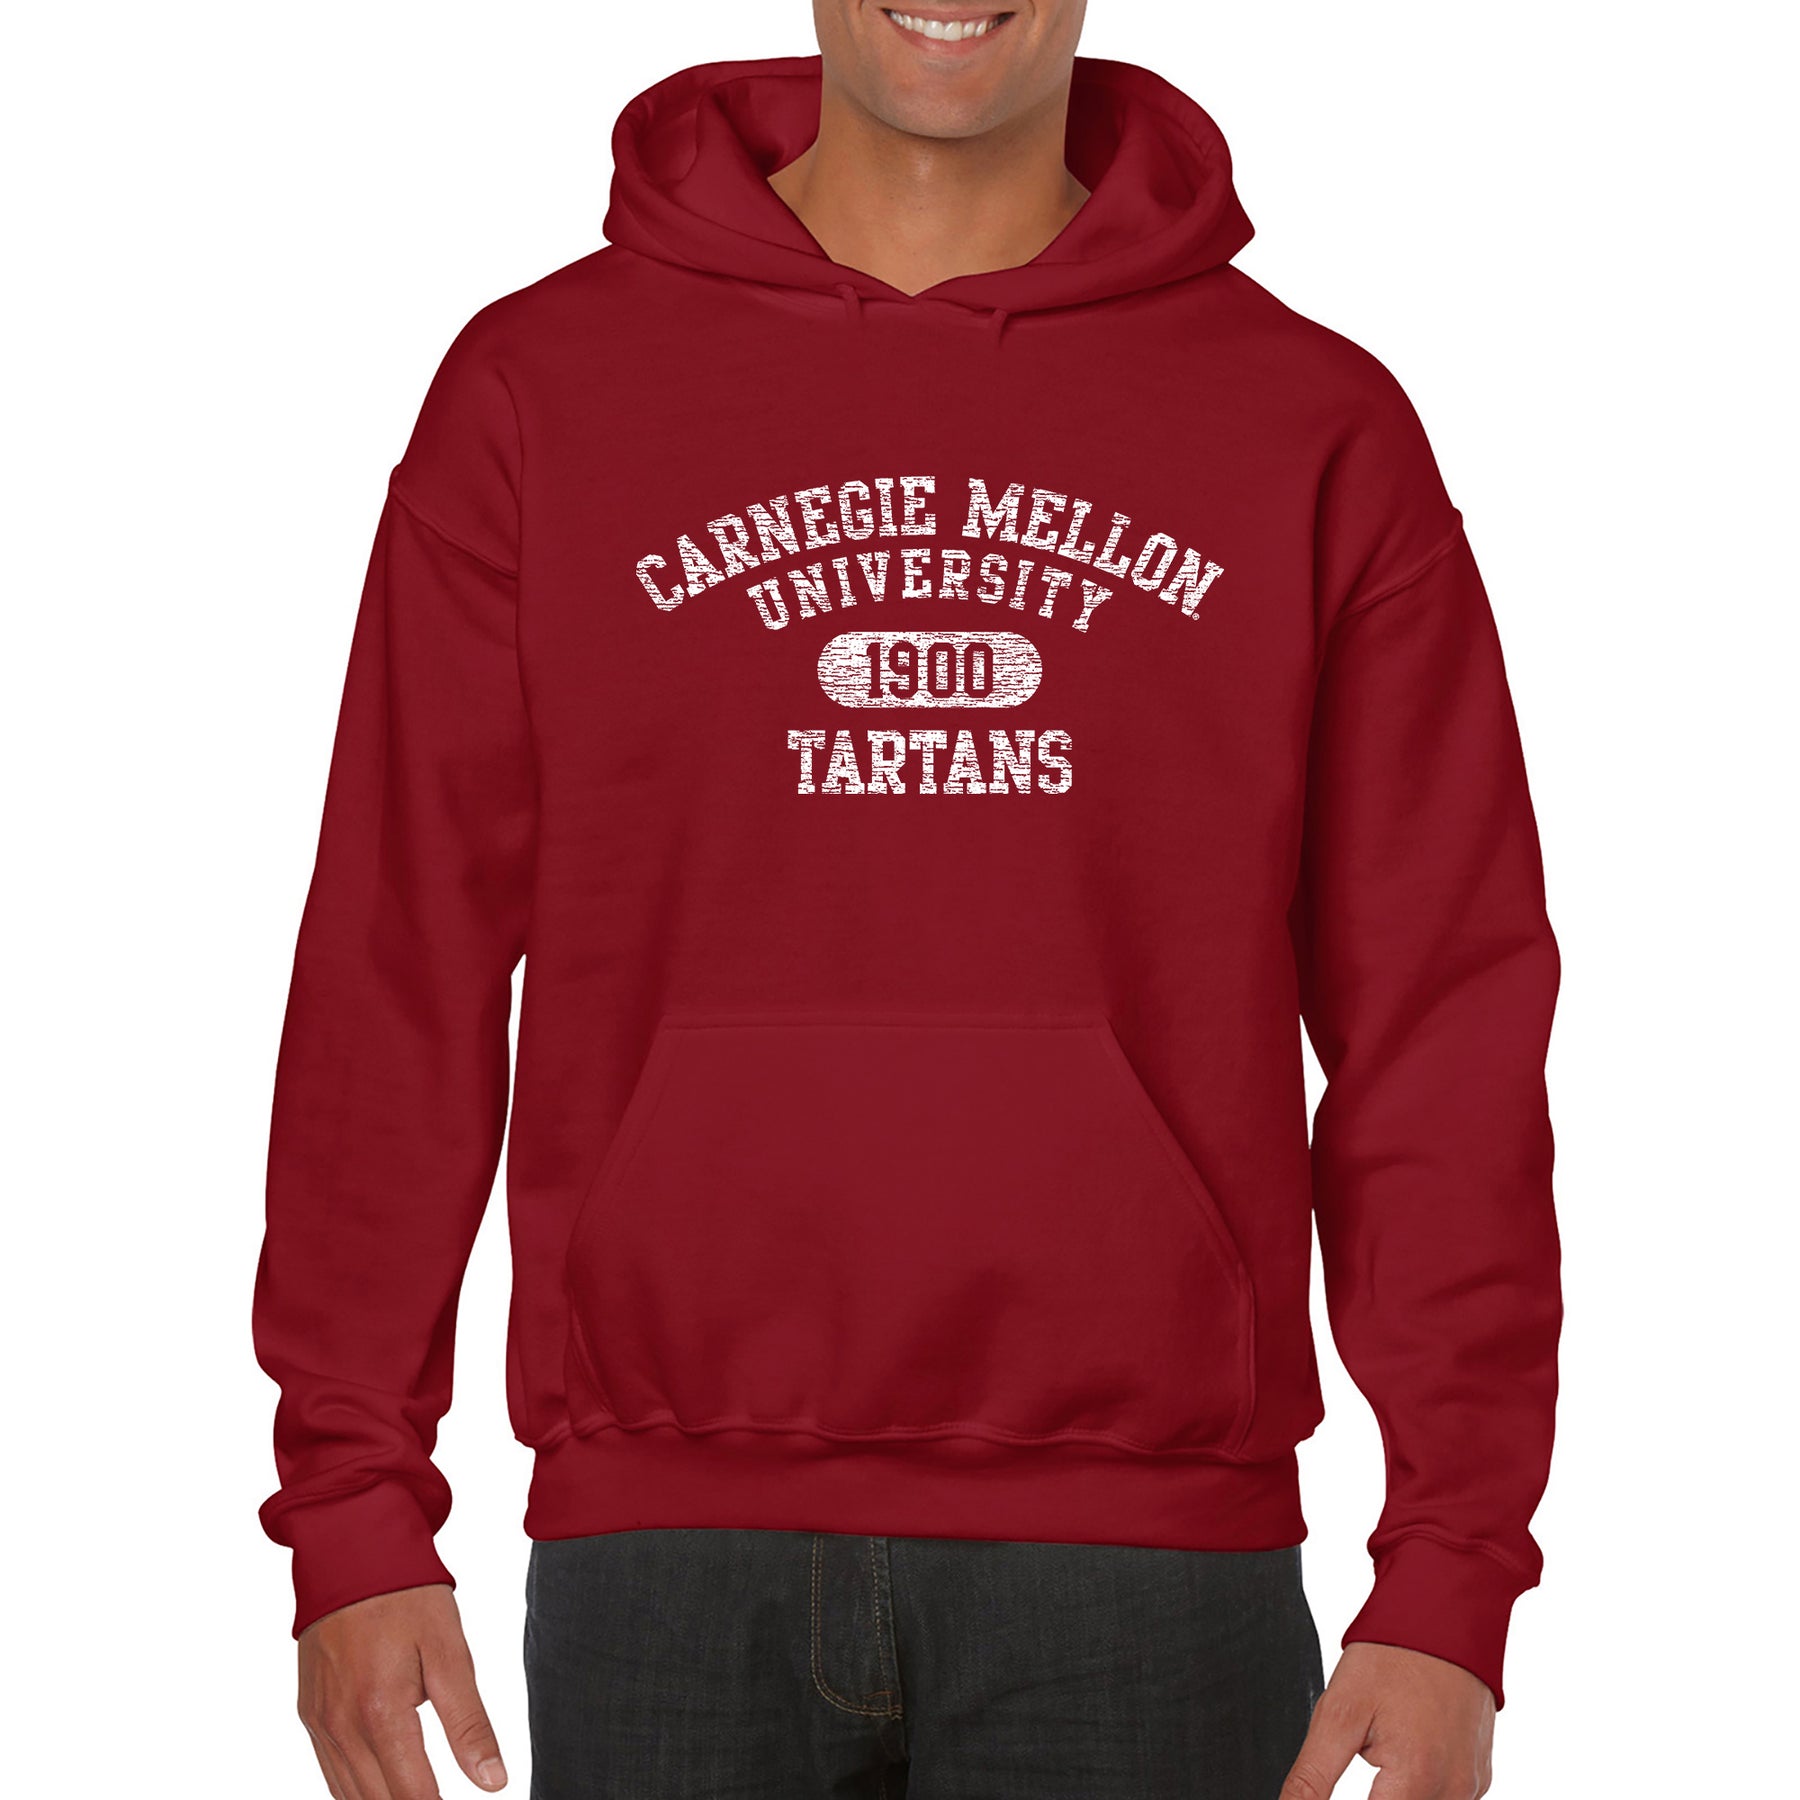 carnegie mellon university hoodie